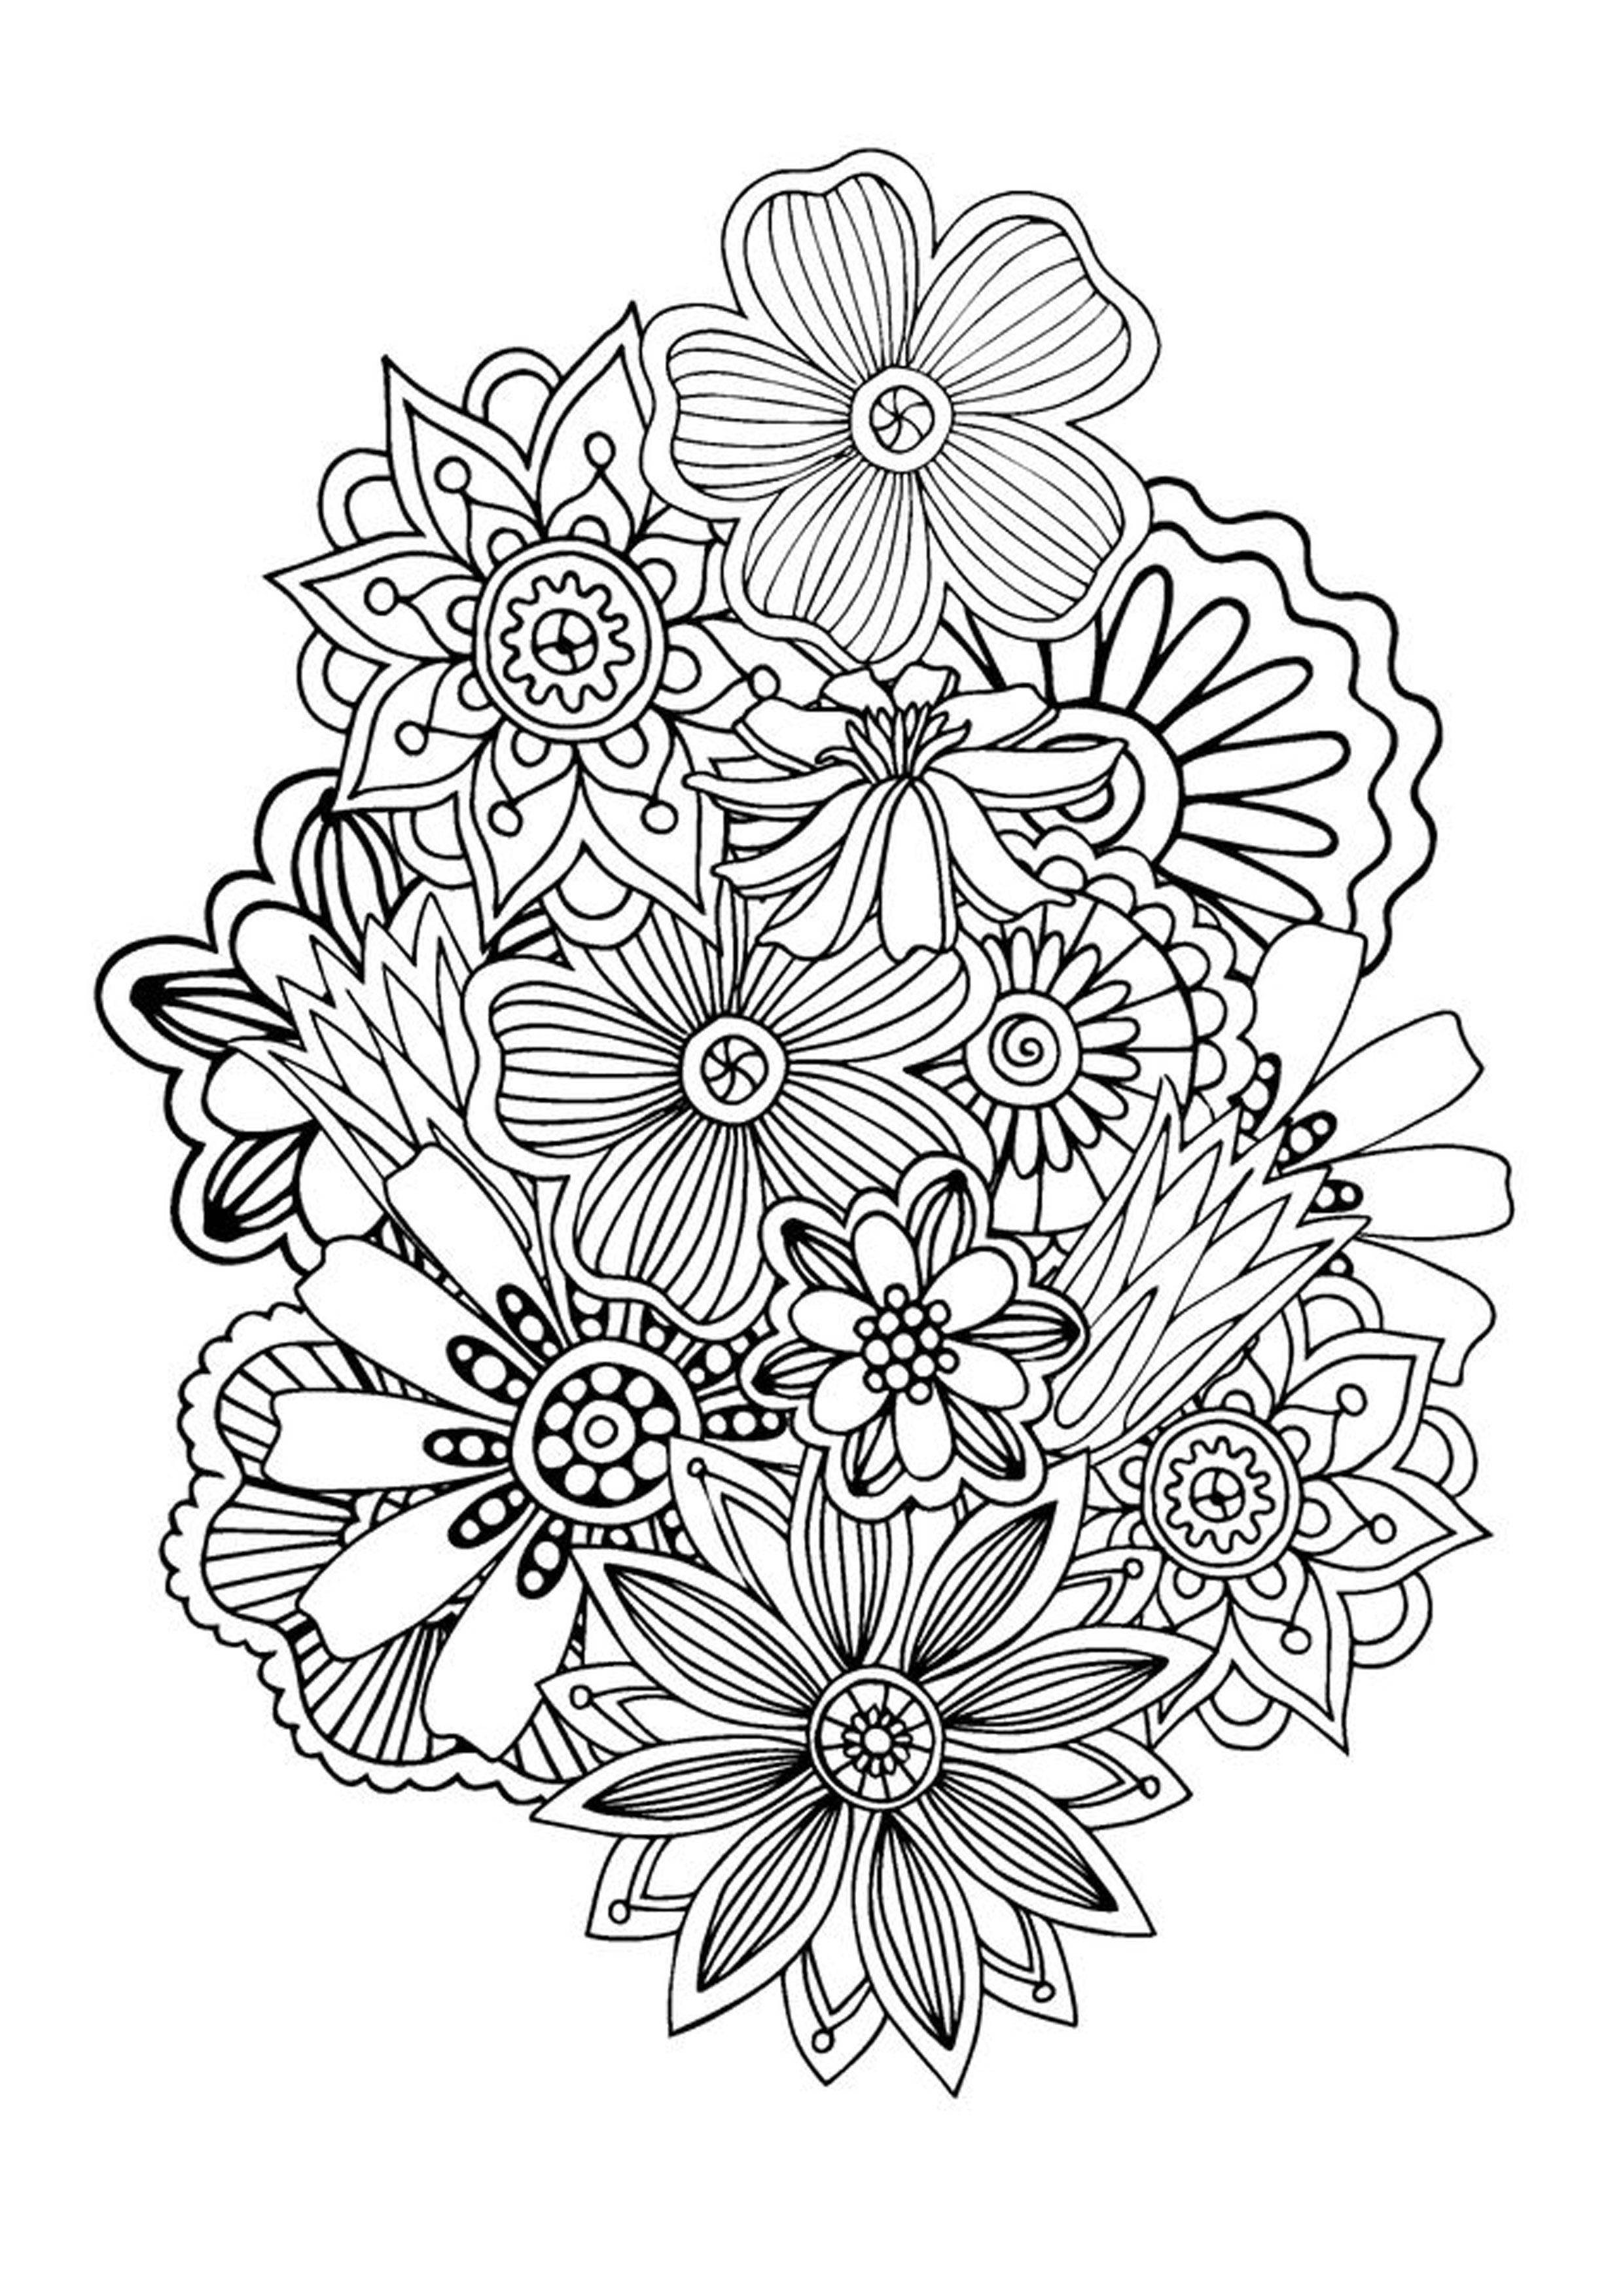 Coloriage 100% Anti-stress : motifs abstraits d'inspiration florale : n°1